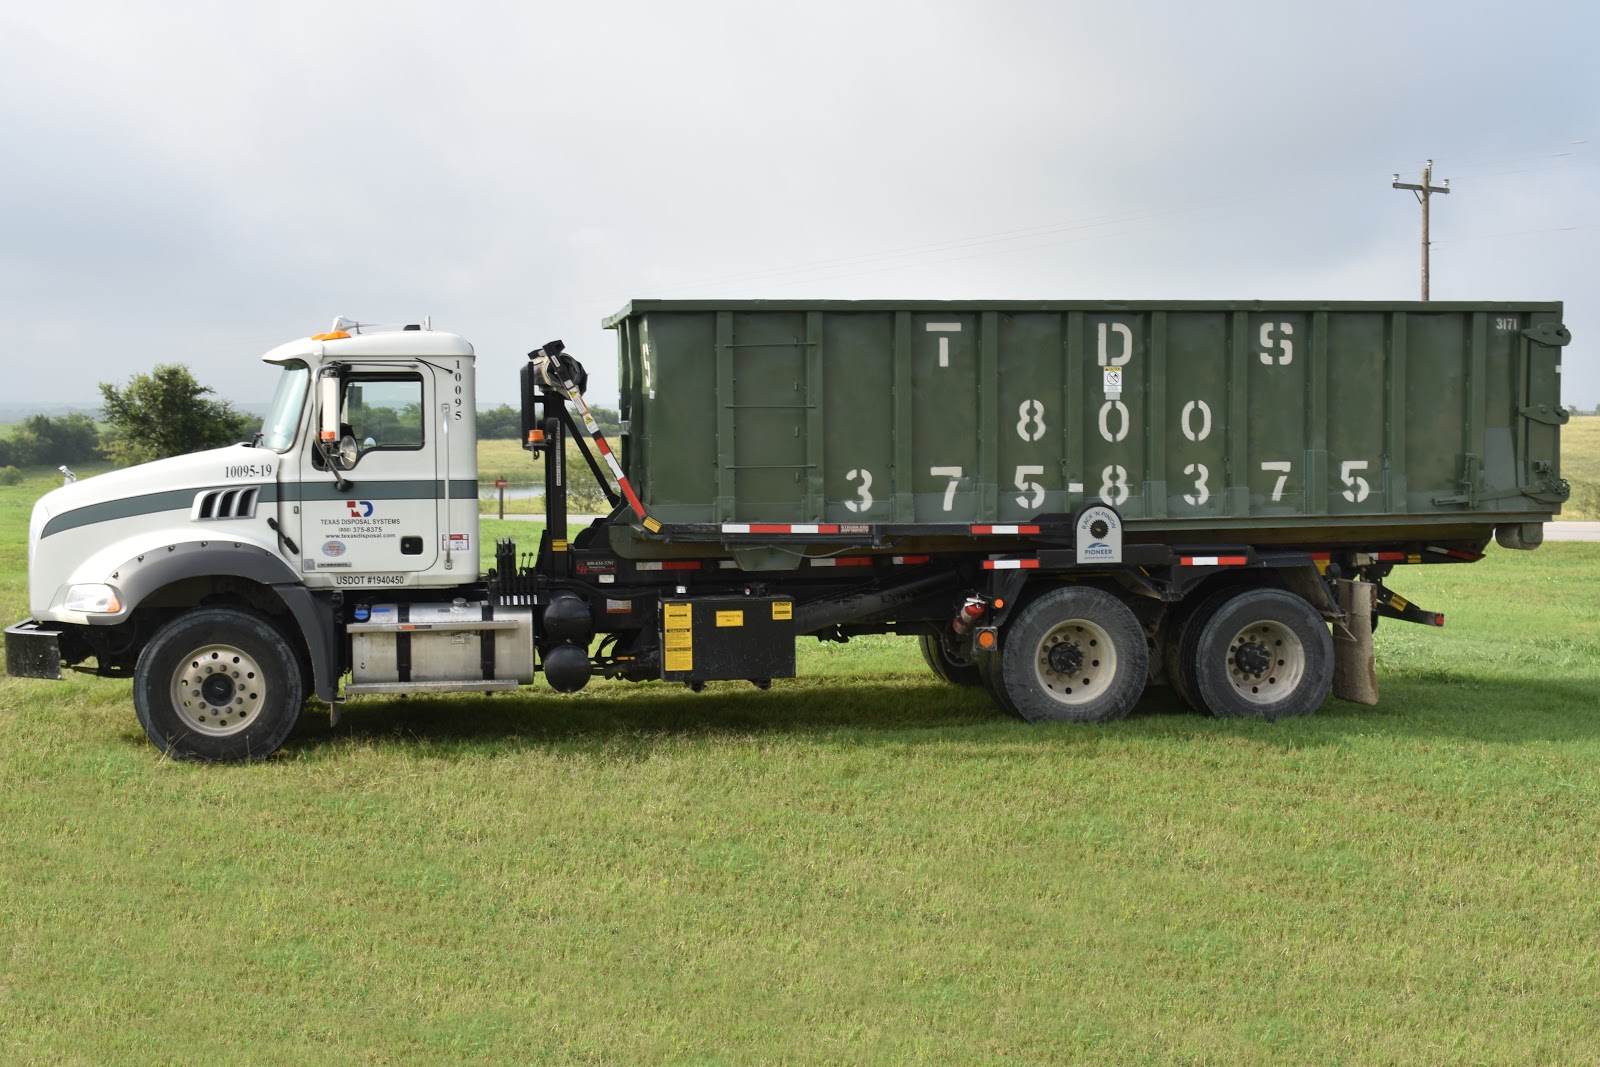 30-yard dumpster rental dimensions